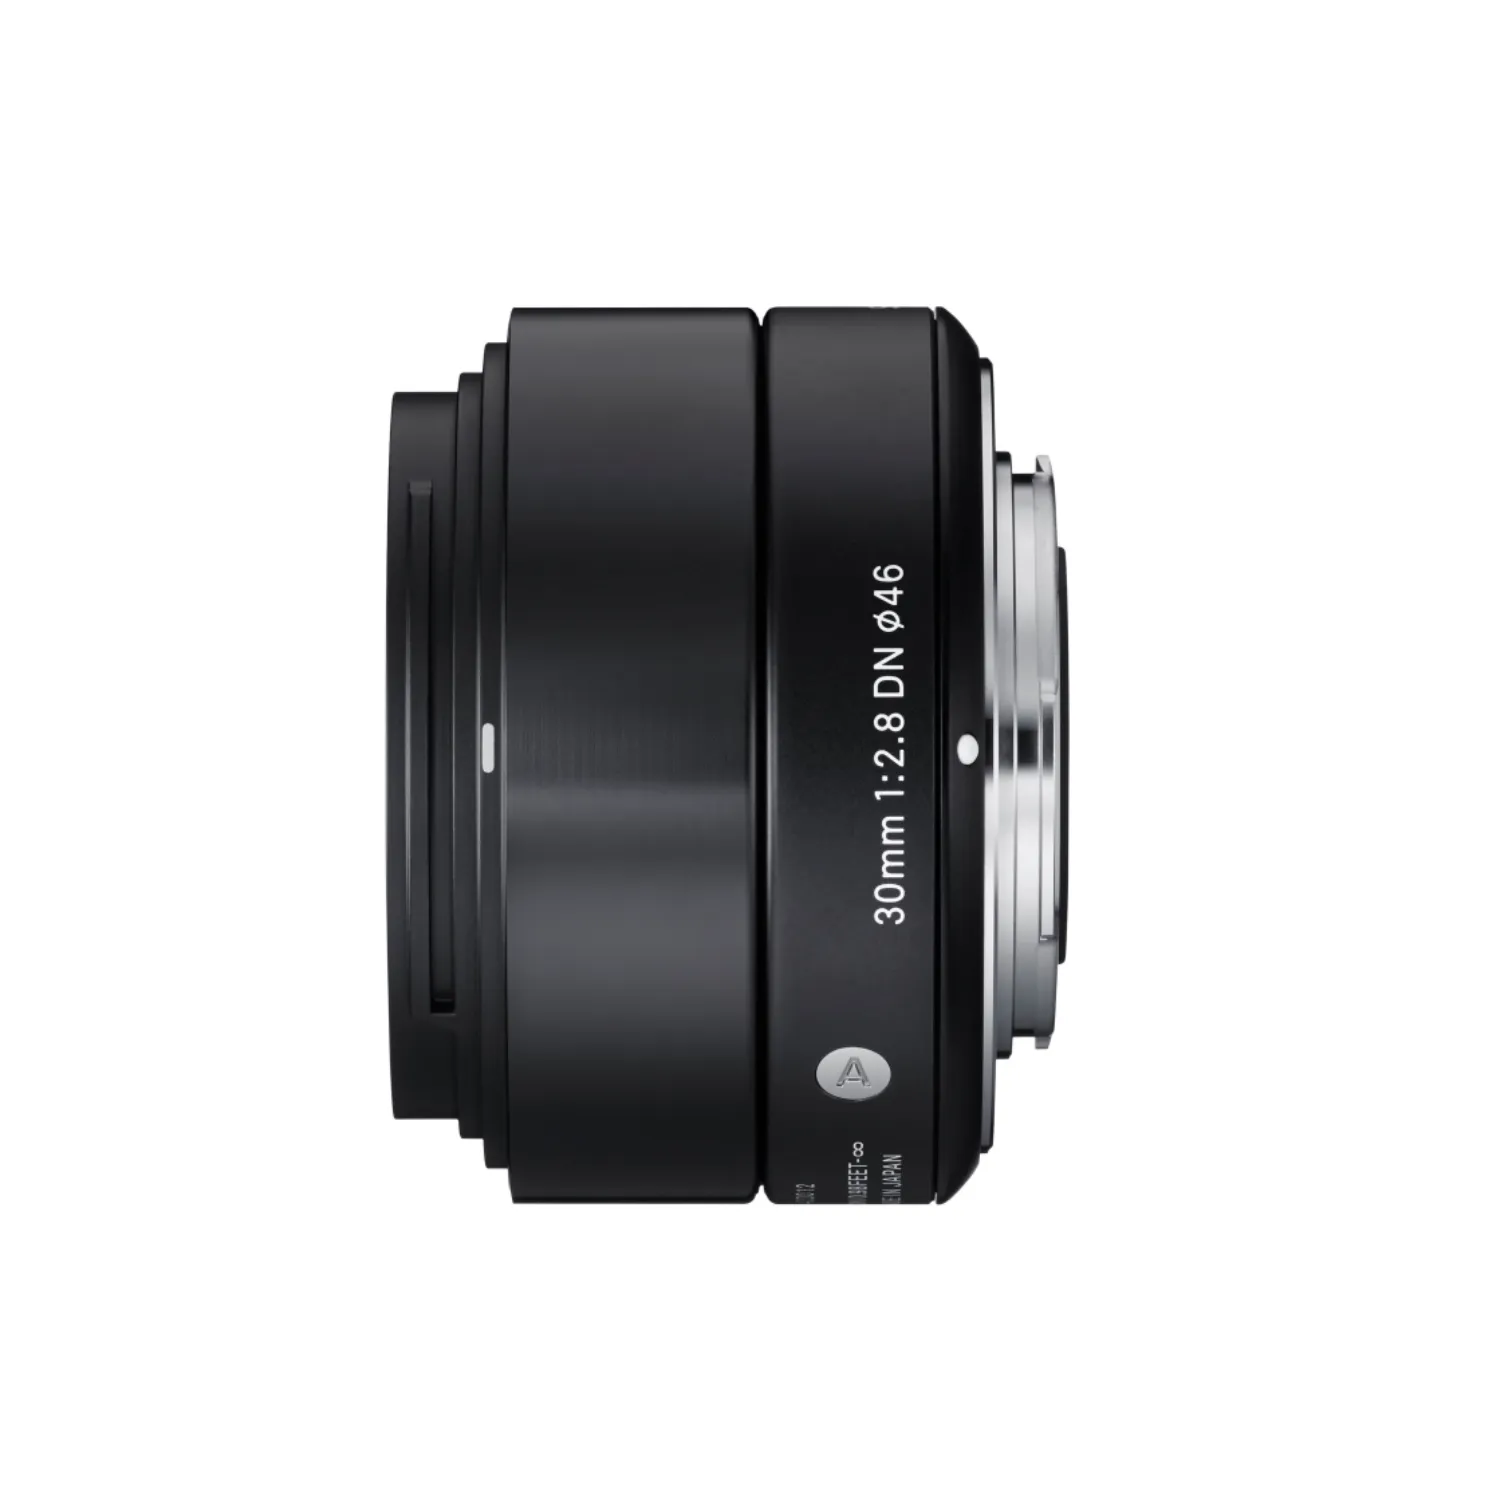 Sigma 30mm f/2.8 DN Art Lens